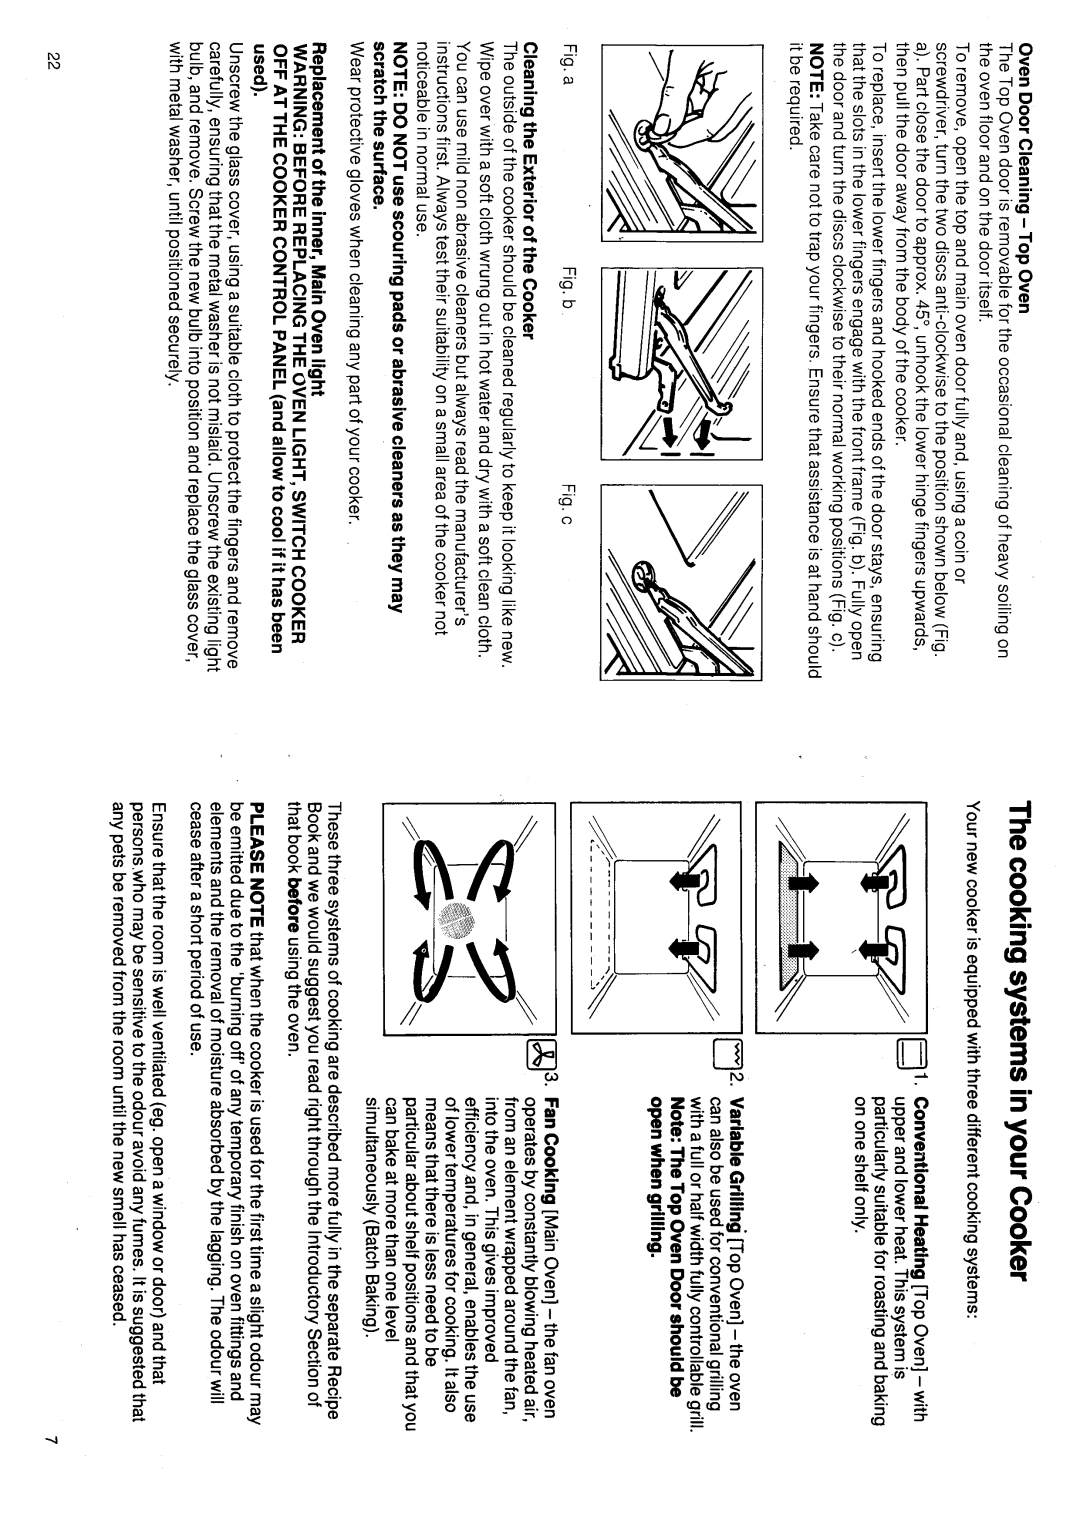 Hotpoint 6531 manual 